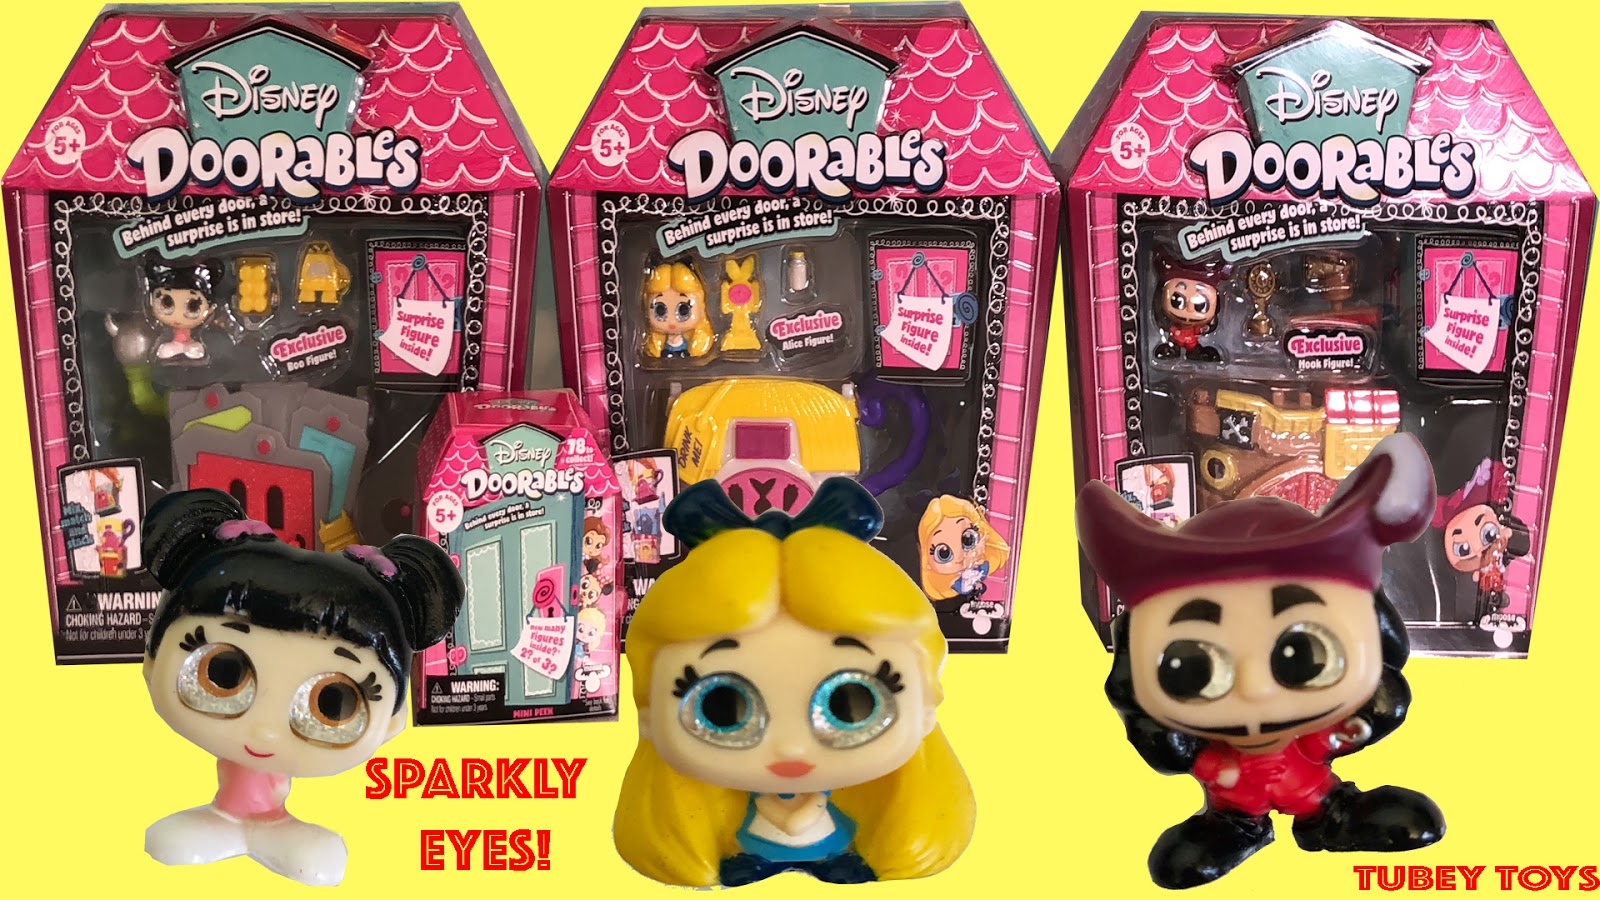 Disney Doorables Adorable Blind Bag Mini Figures Toy Review Unboxing 